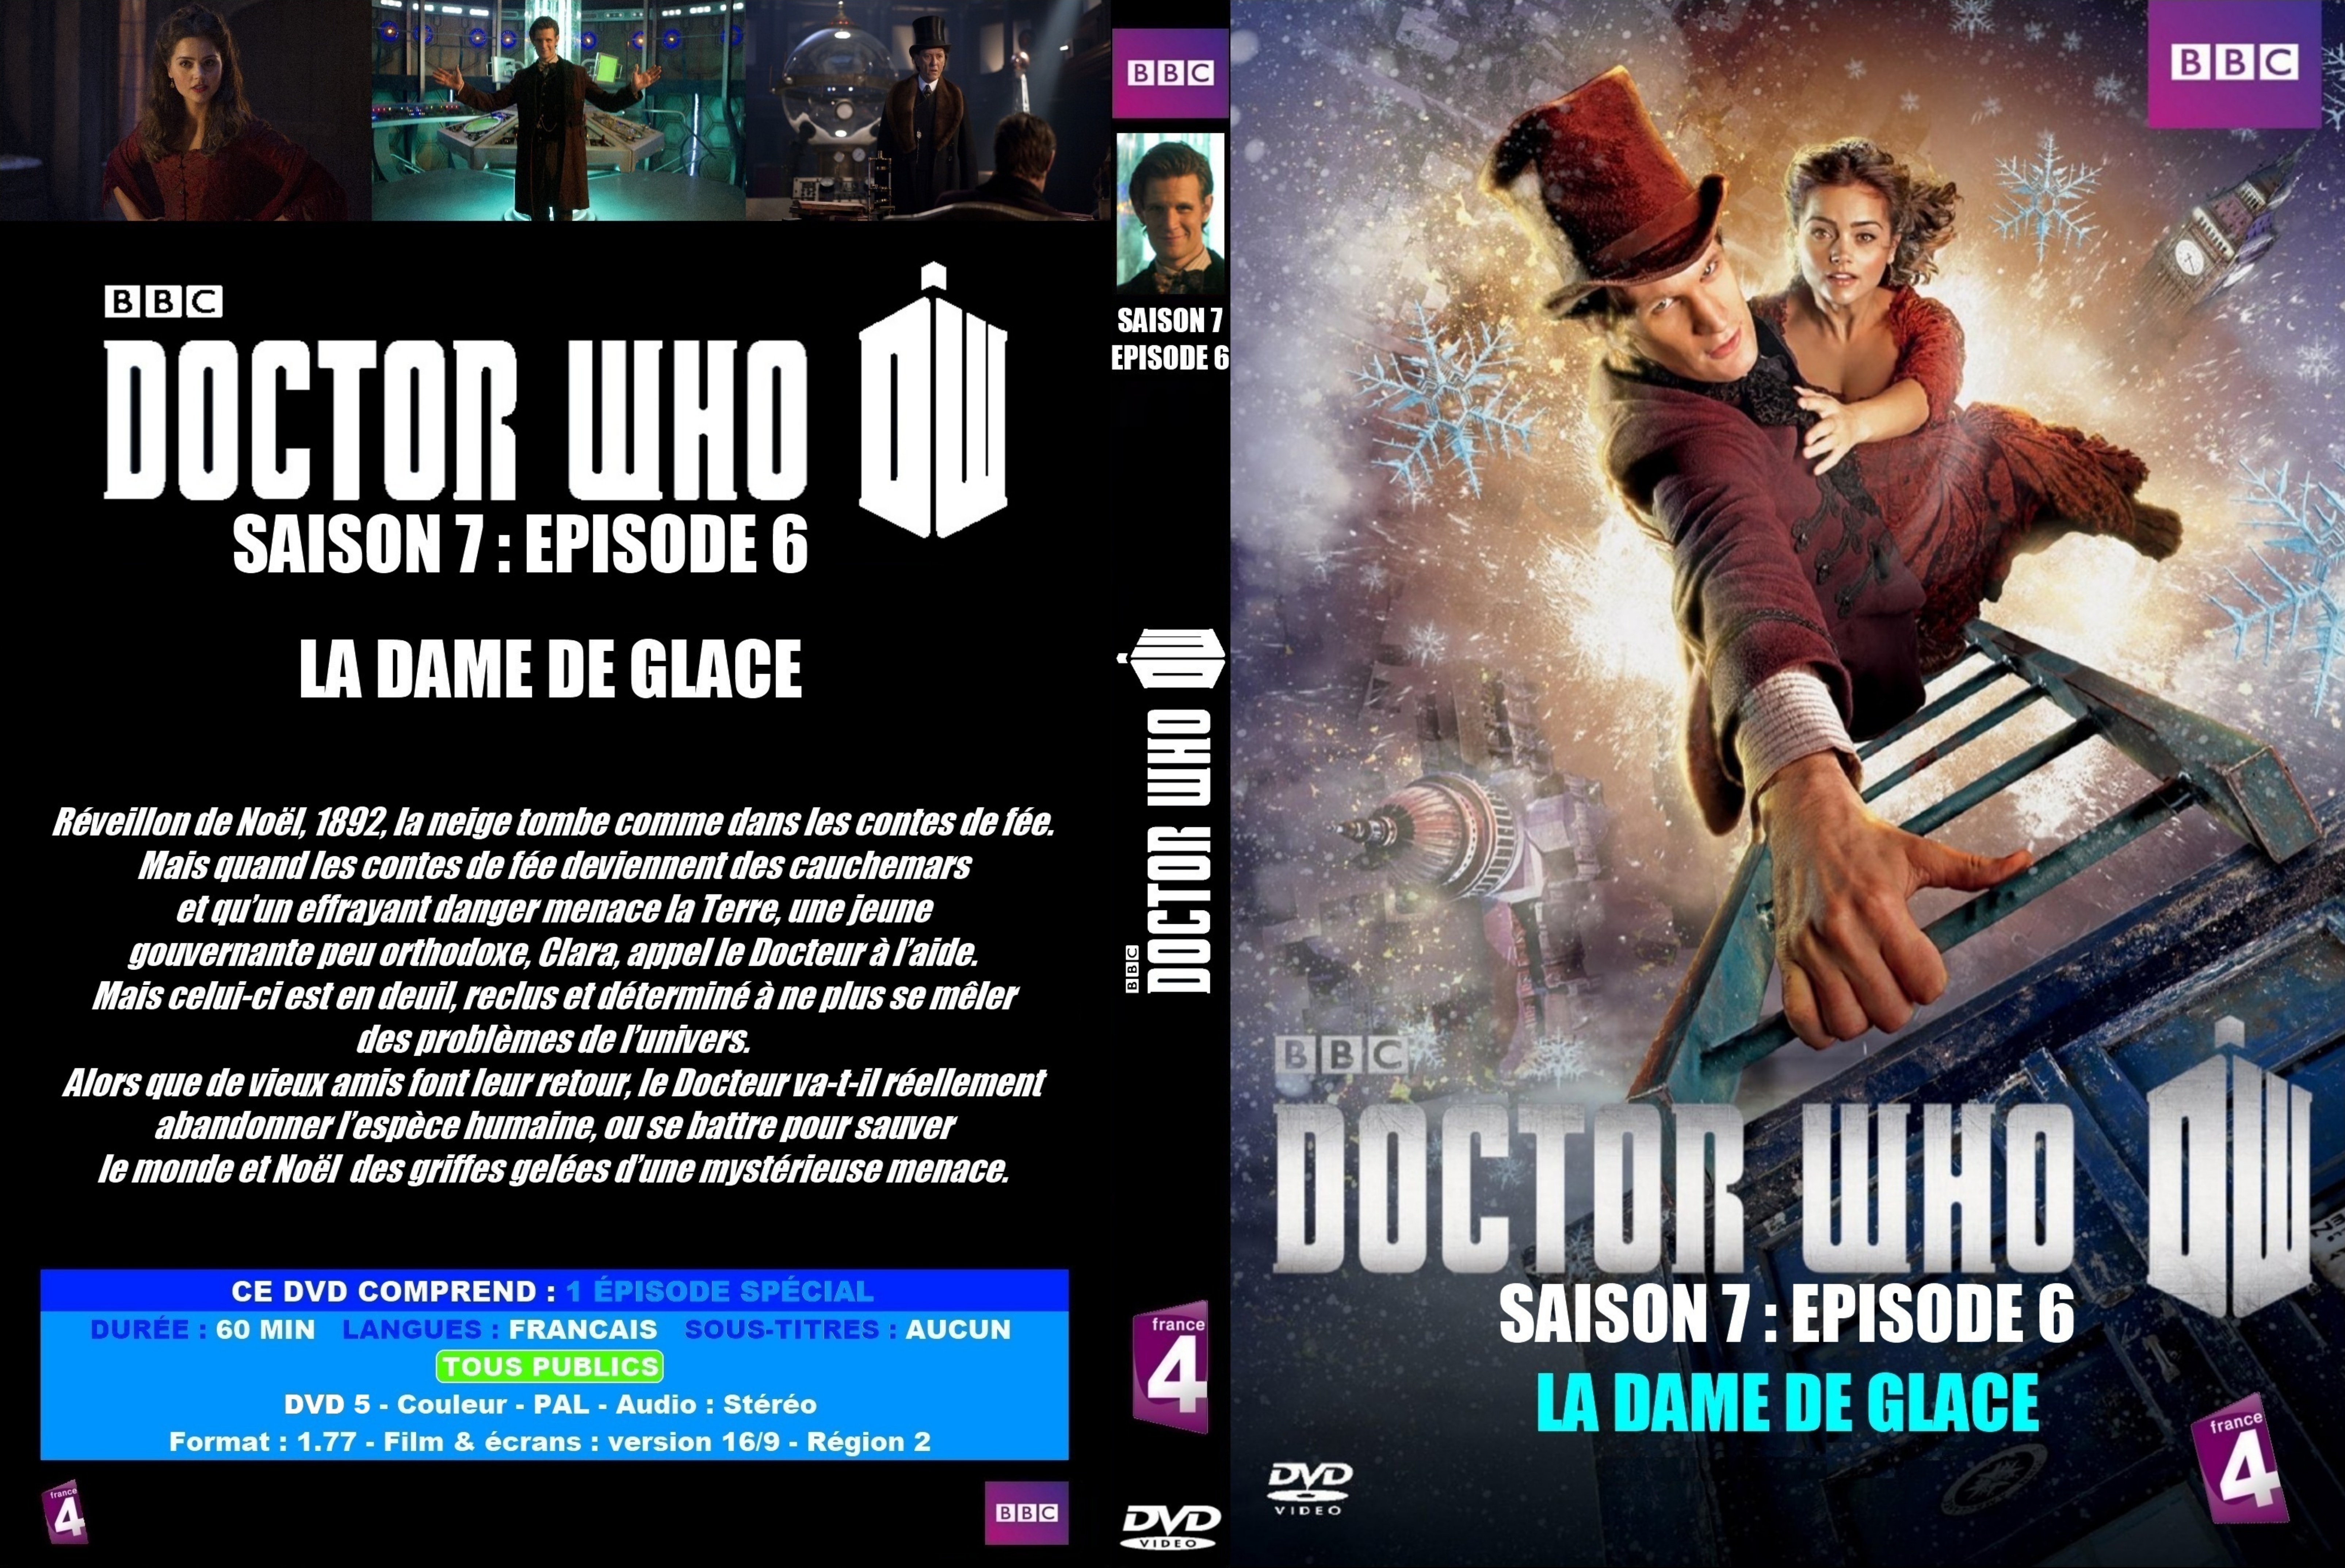 Jaquette DVD Doctor Who Saison 7 Episode 6 custom